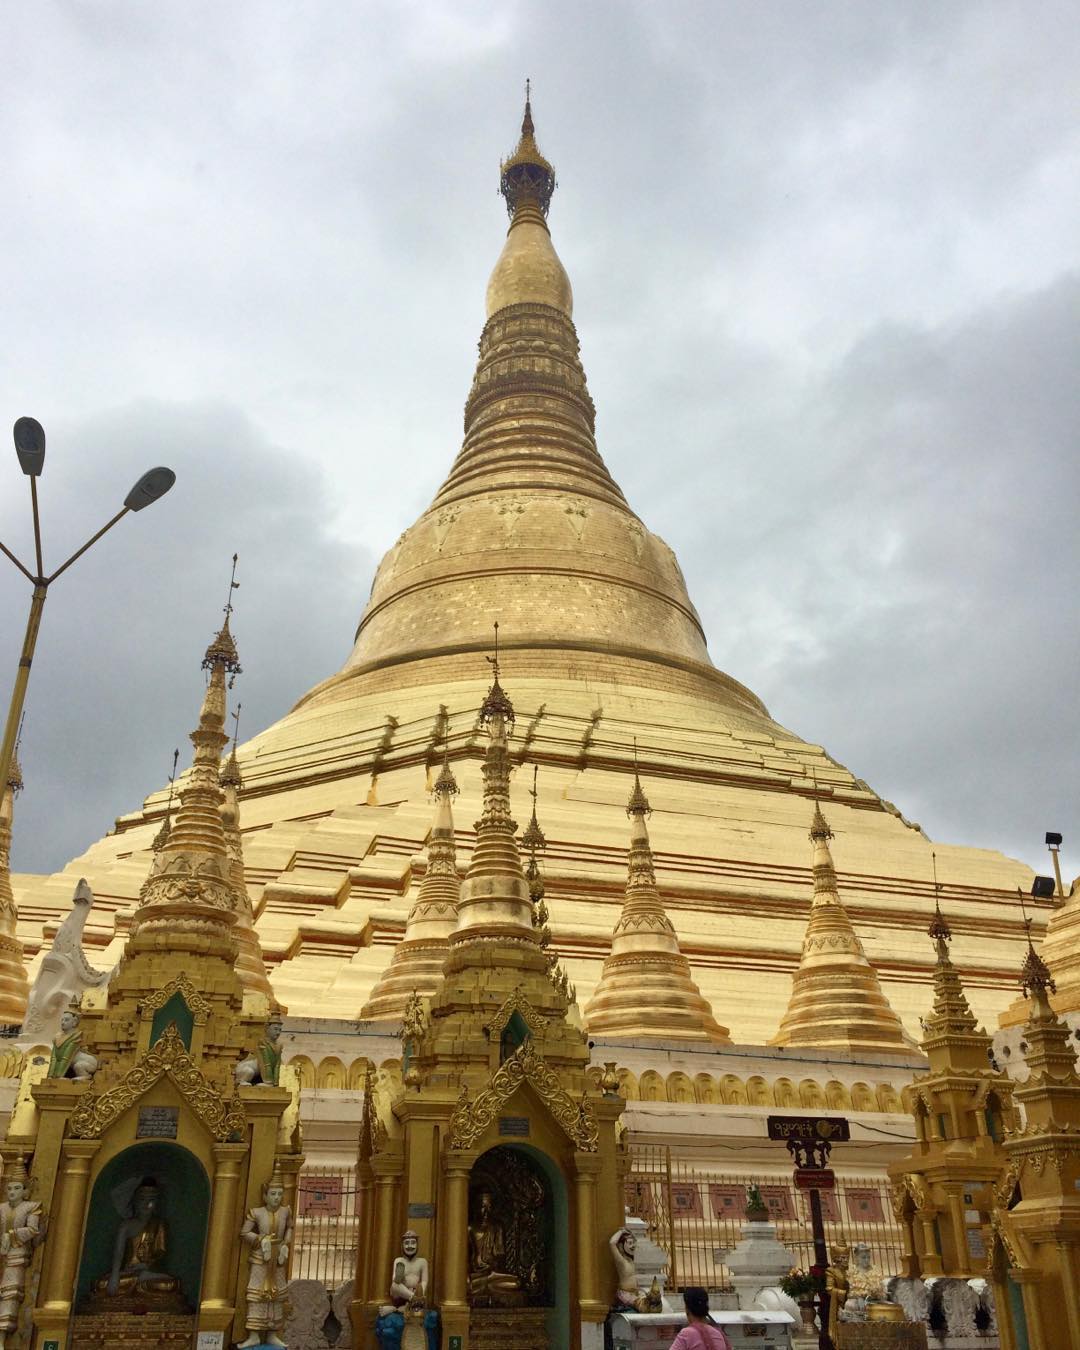 Shwedagon Pagoda, Yangon, Myanmar 🇲🇲.
.
The Shwedagon or Golden Dagon Pagoda in the centre of Yangon. I remember getting off the plane and seeing this 105m high pagoda almost the entire journey to my hostel. It was equally impressive up close.
.
#travel #myanmar #pagoda #yangon #backpacker #backpacking #traveller #asia #burma #seasiatravel #burmese #travellingthroughtheworld #shwedagon #instatravel #travelgram #explore #myanmartravel #visitmyanmar #gold #shwedagonpagoda #seasia #travelling